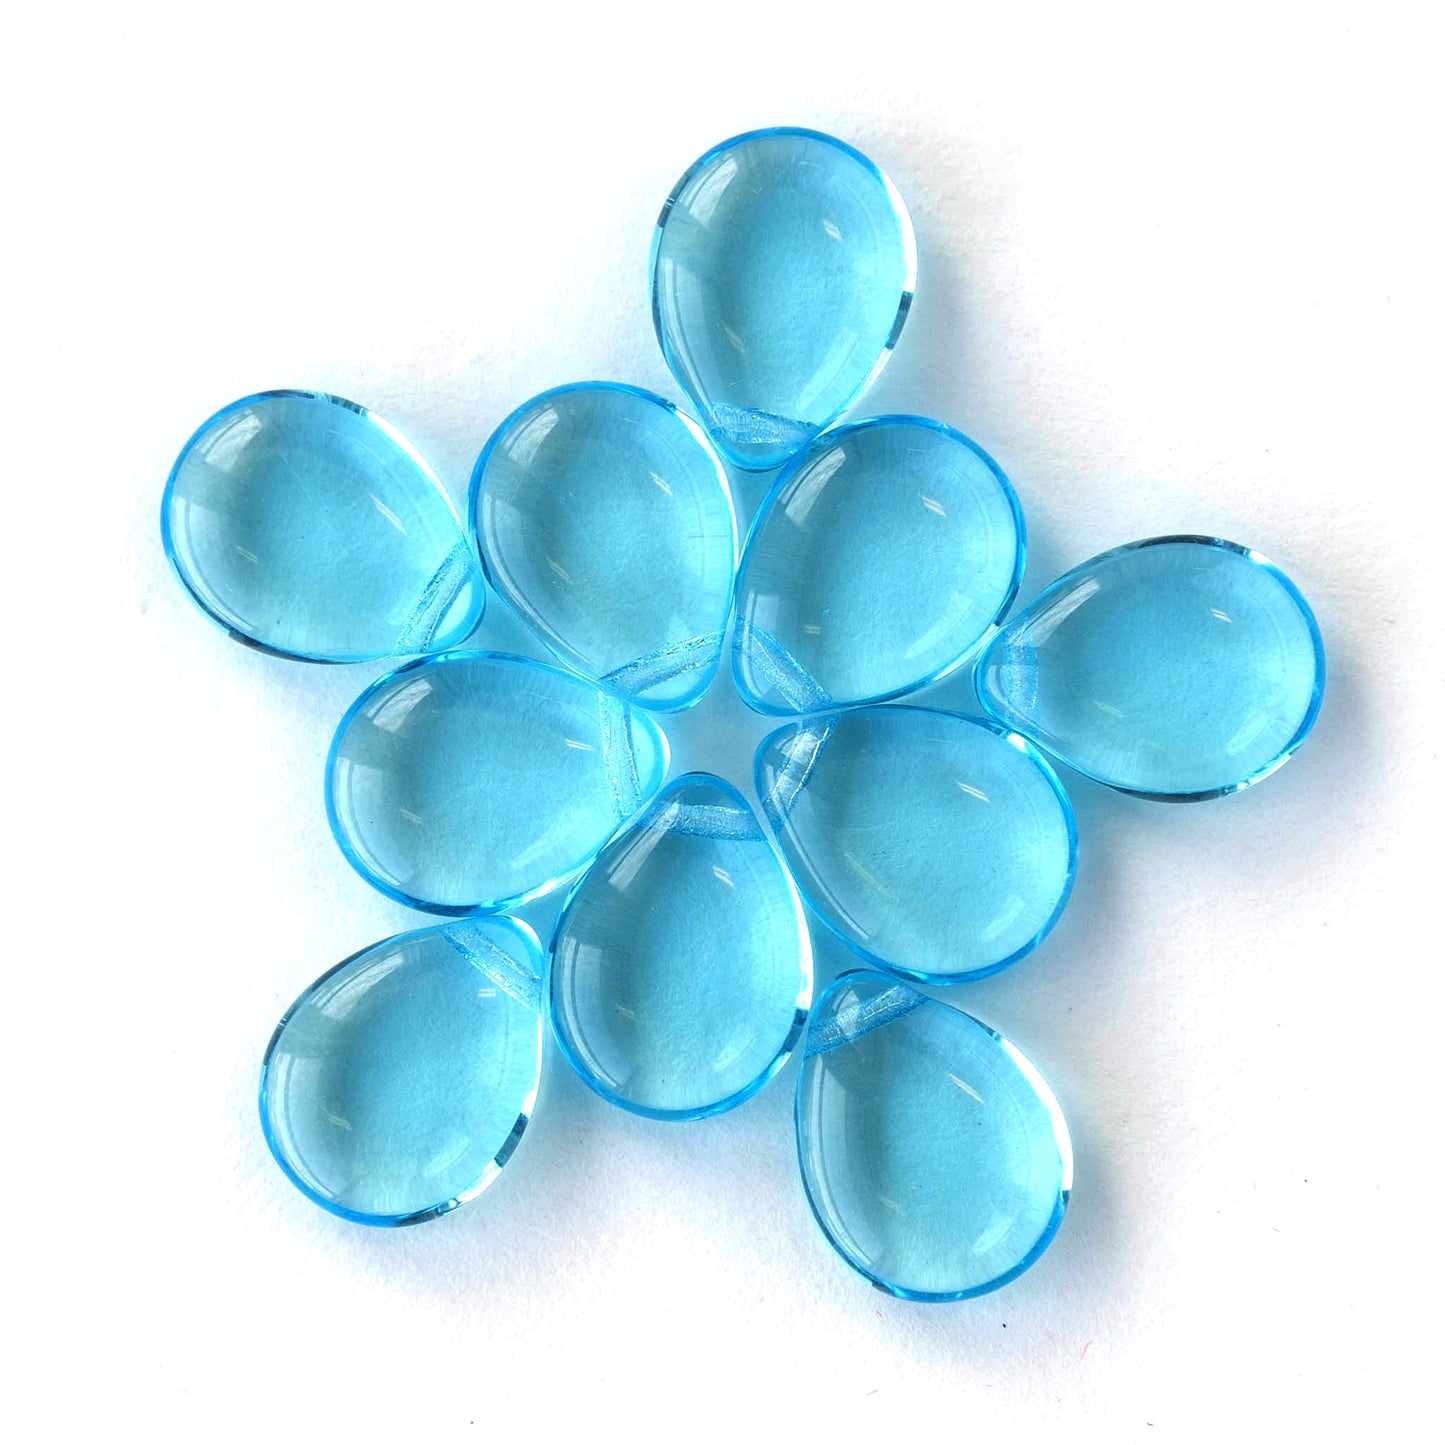 12x16mm Flat Glass Teardrop Beads - Aqua - 20 Beads